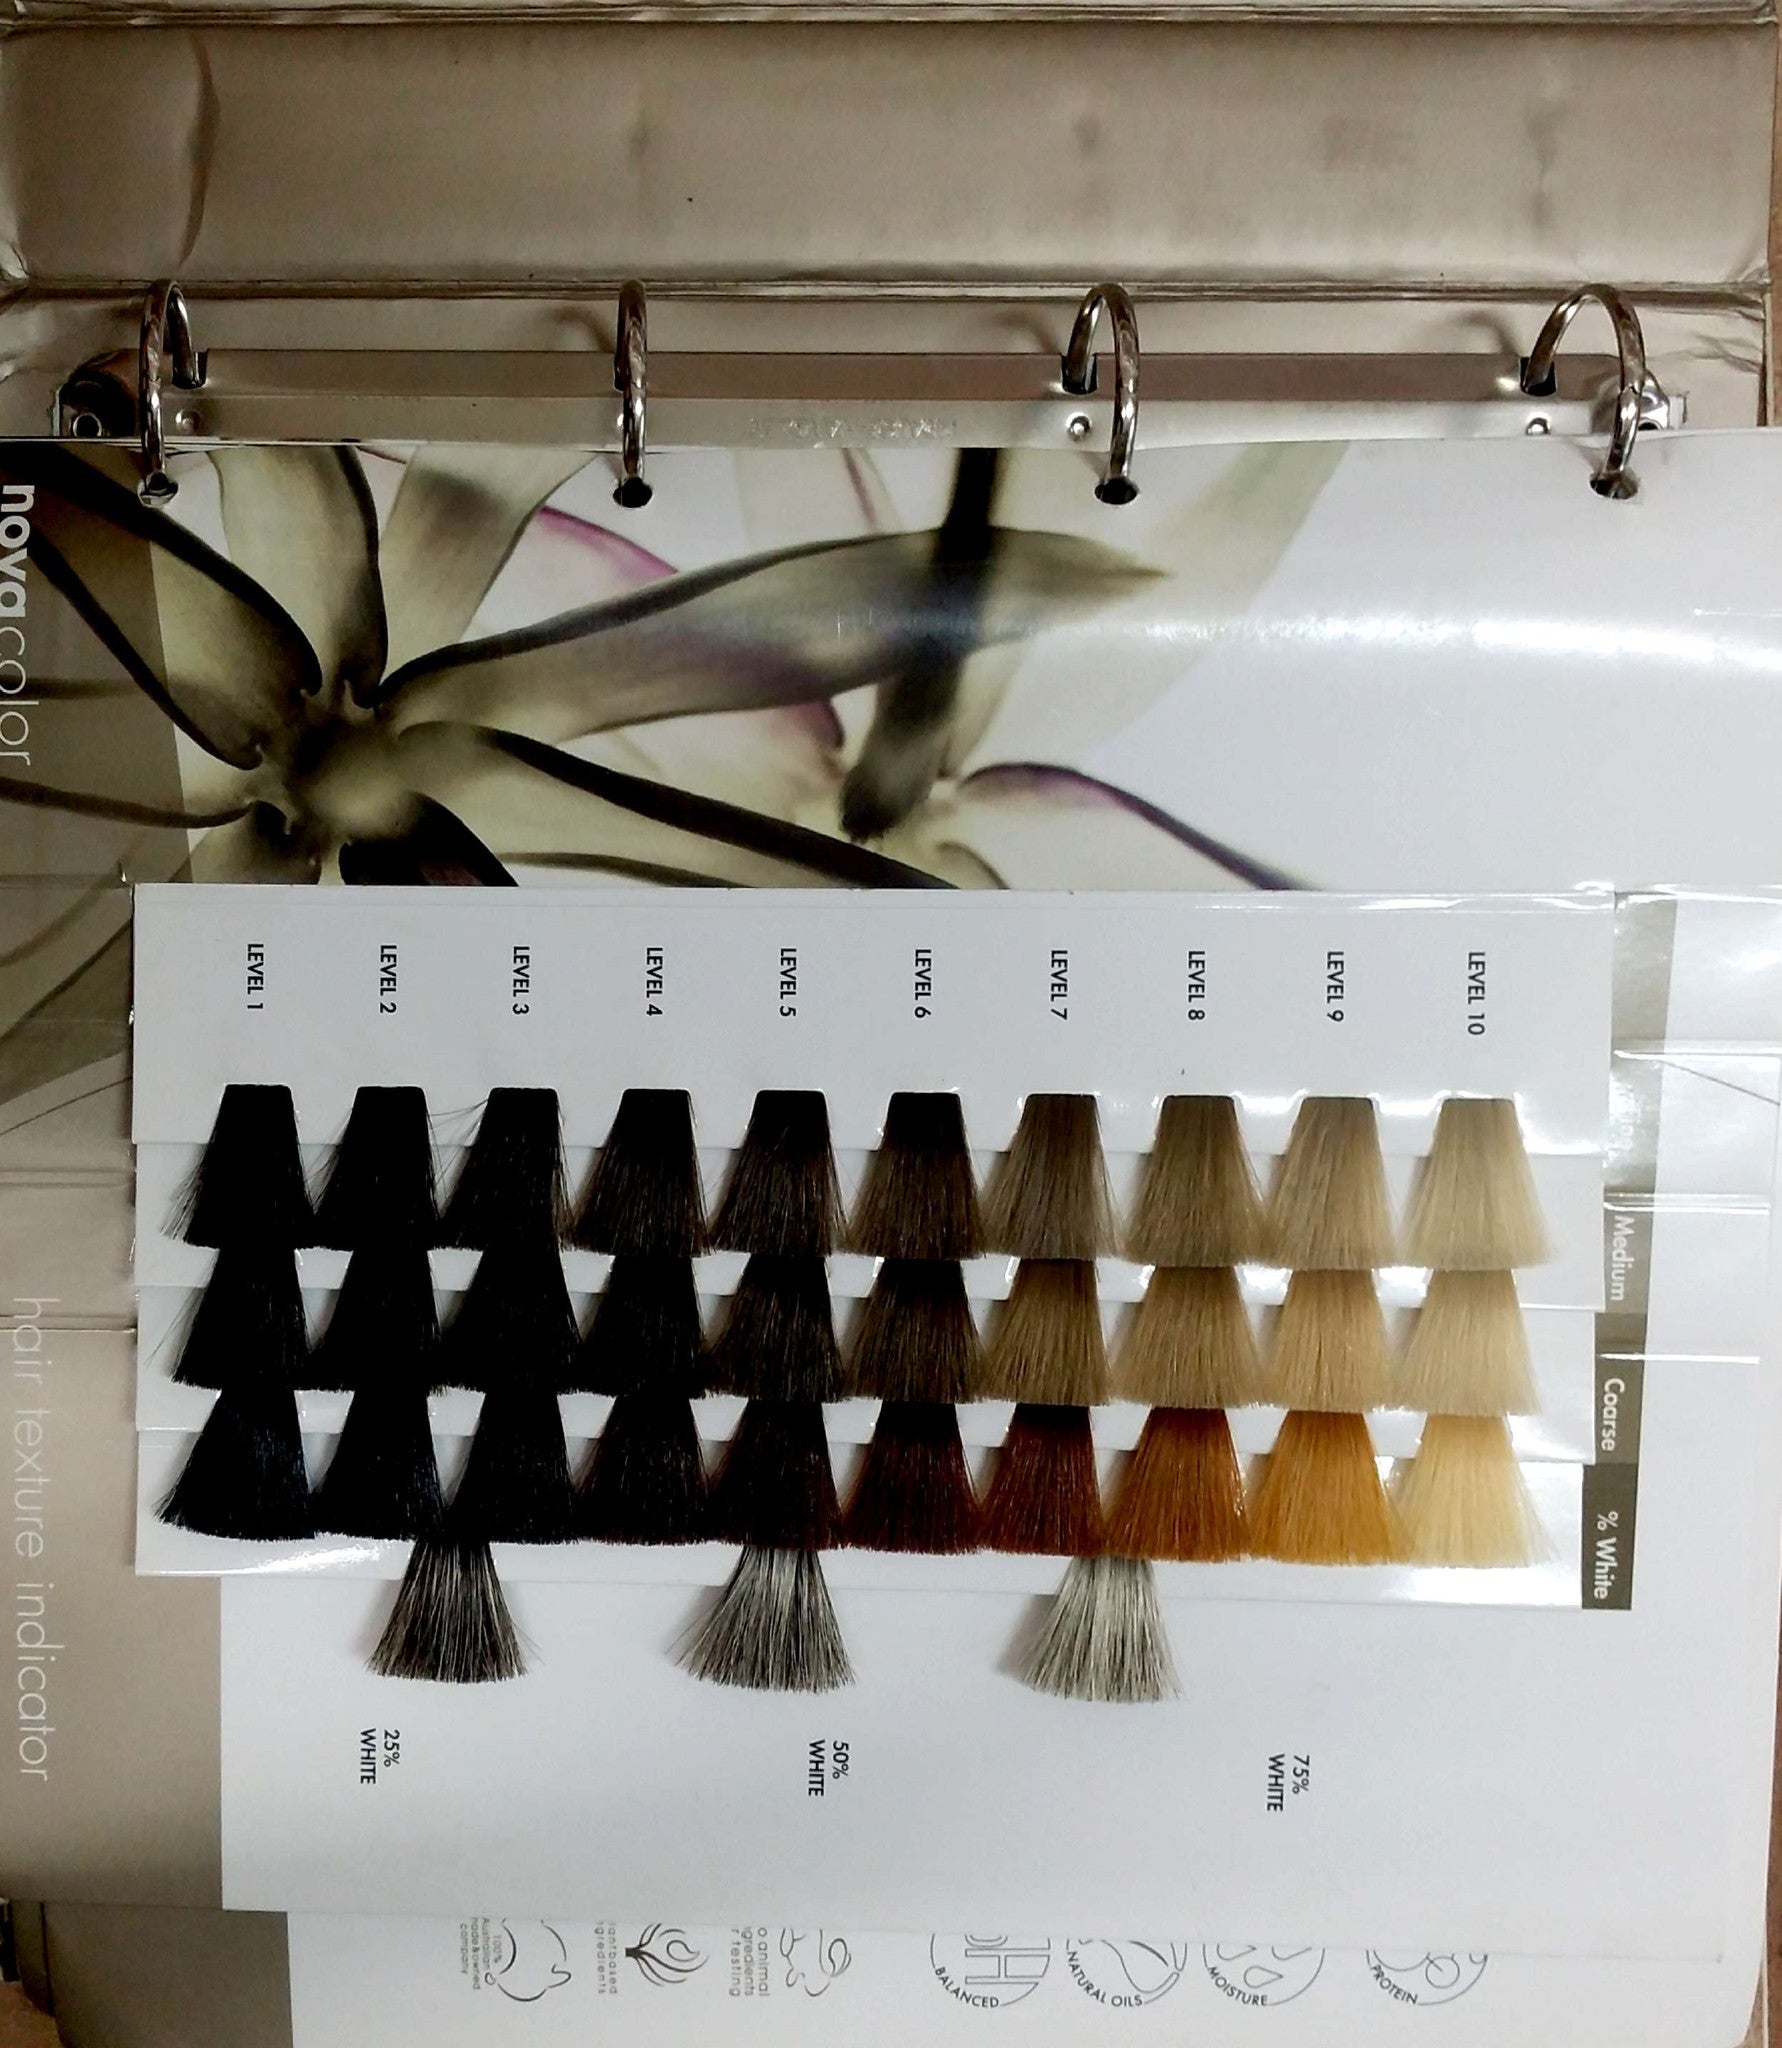 Novacolor Hair Color Chart